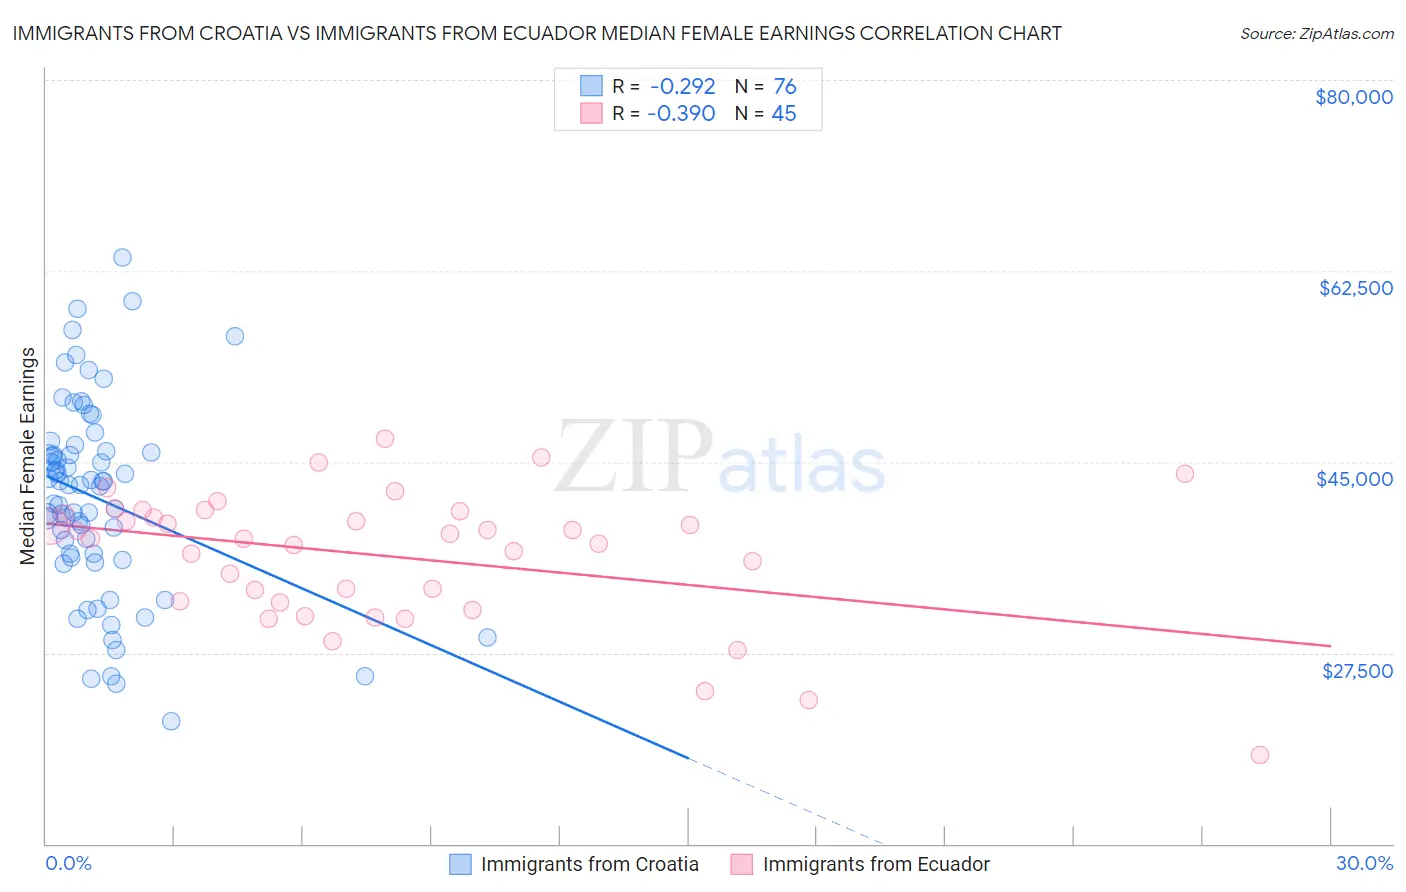 Immigrants from Croatia vs Immigrants from Ecuador Median Female Earnings